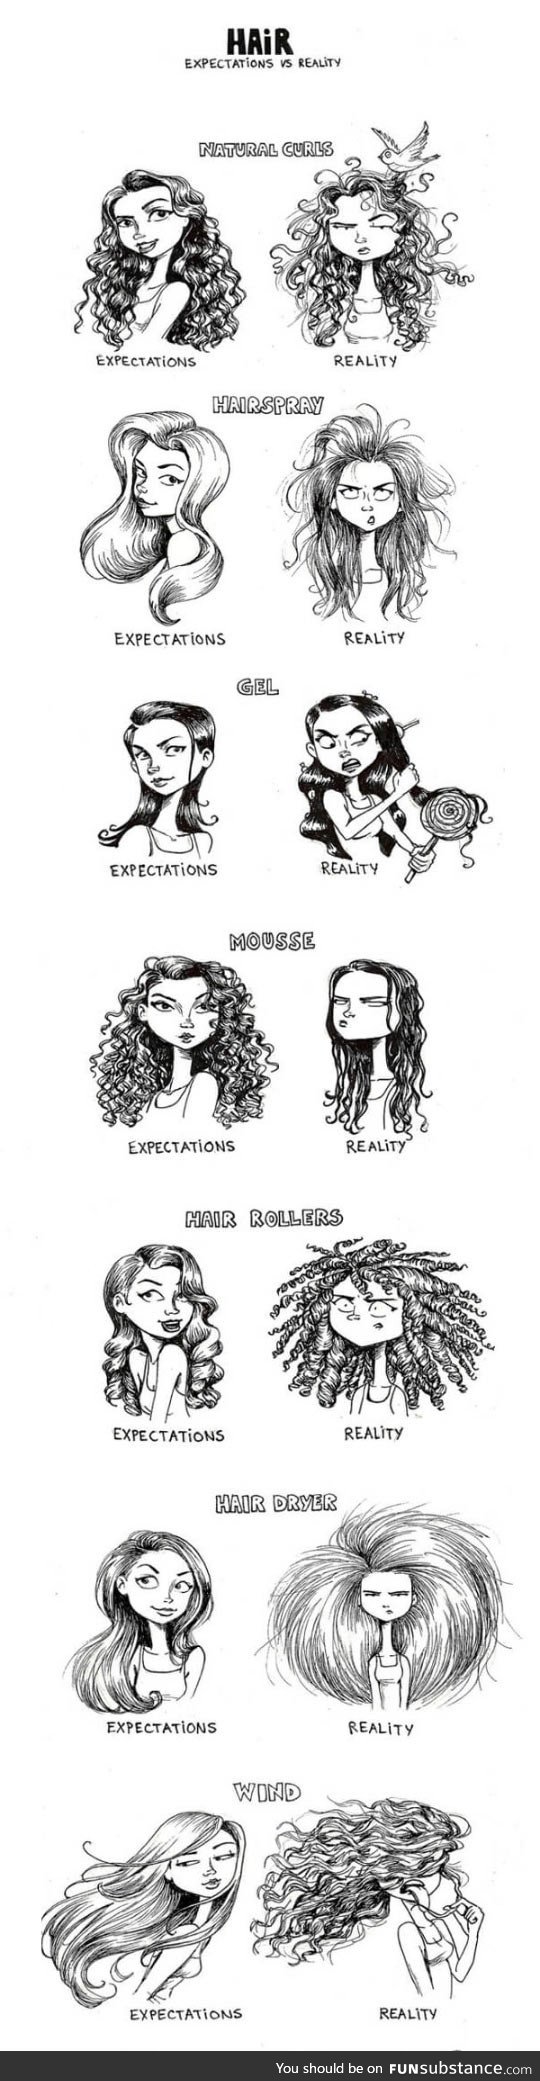 Women's Hair: Expectations Vs. Reality